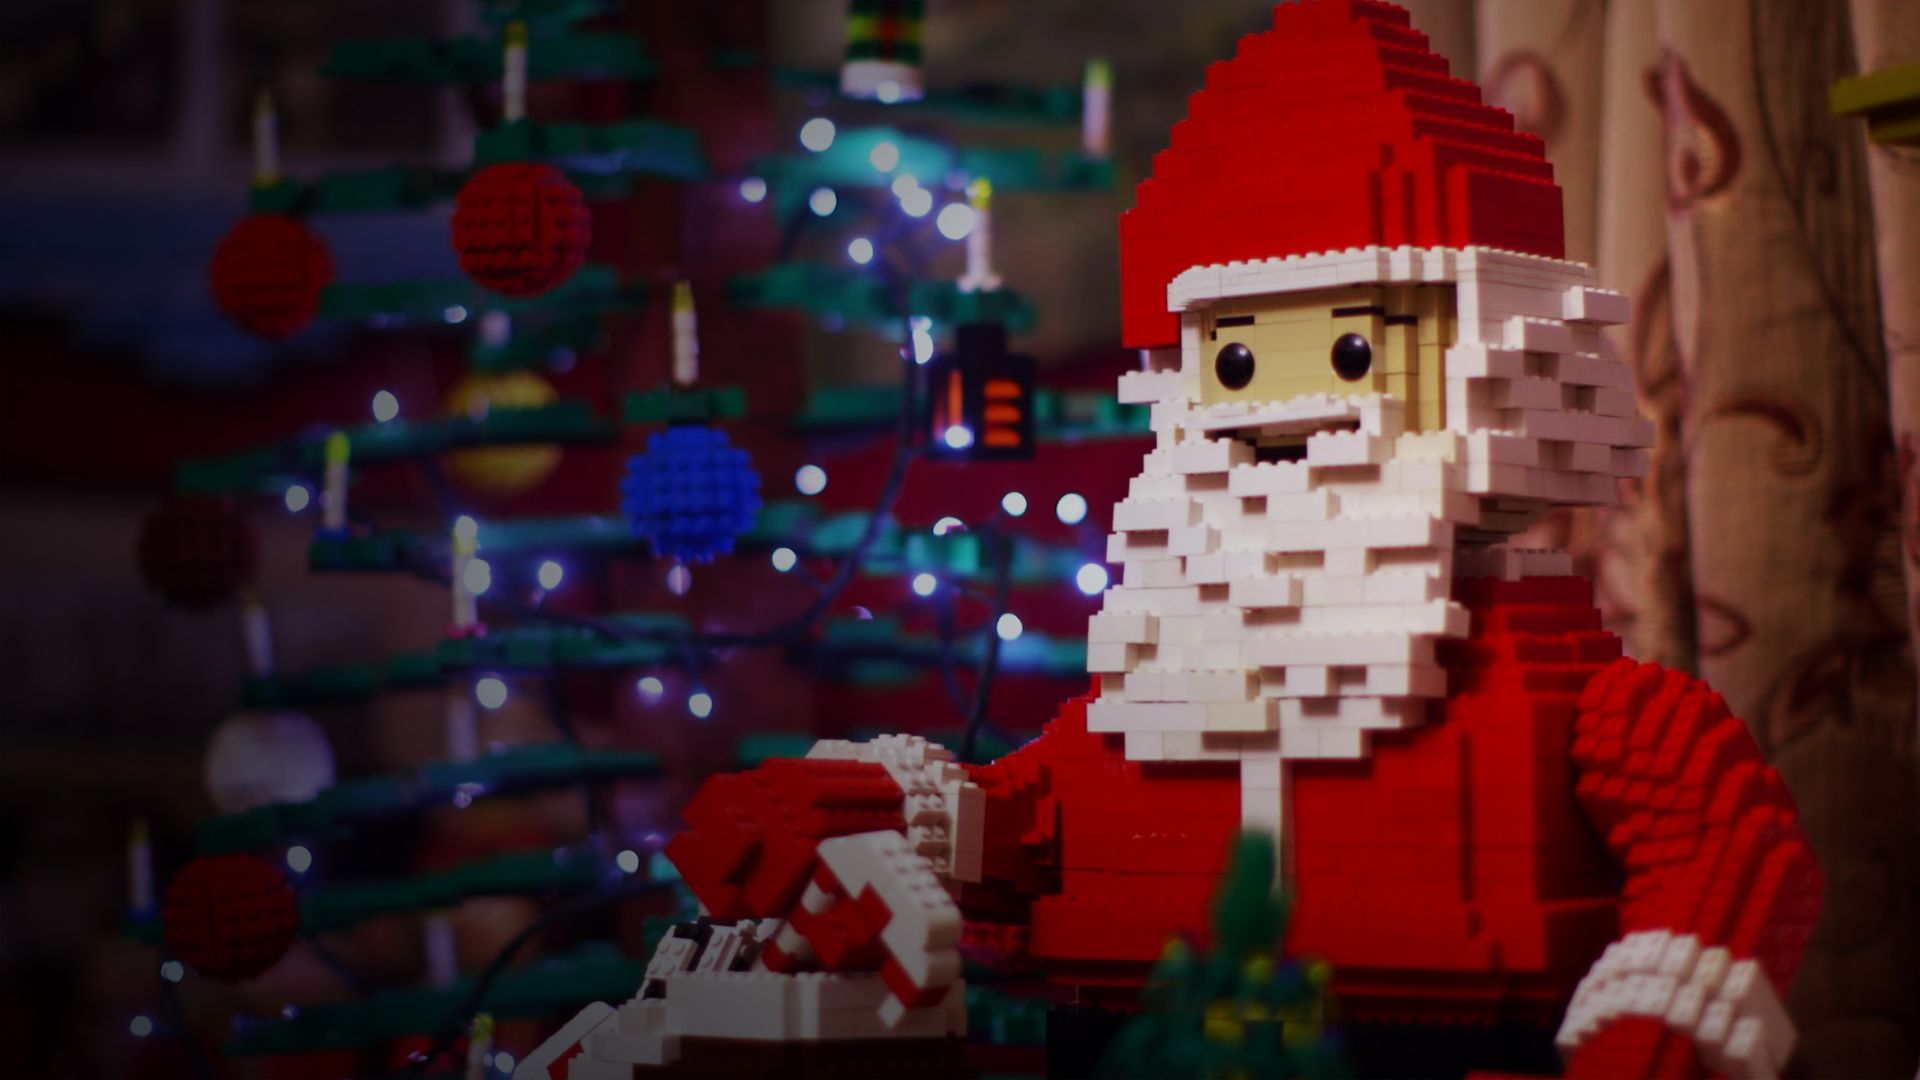 Inside LEGO at Christmas